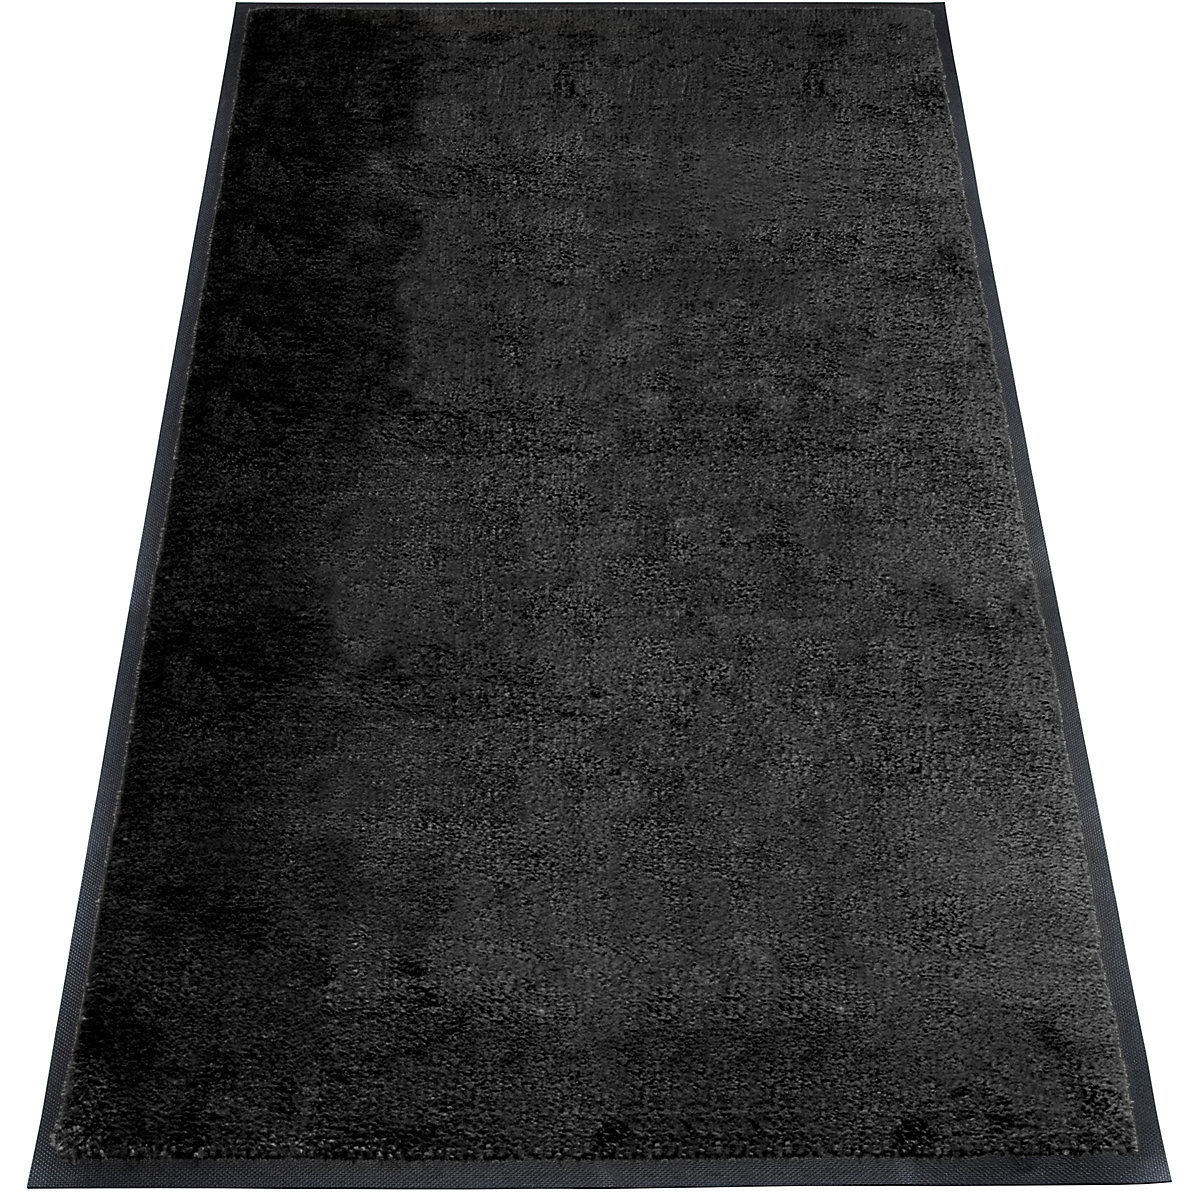 EAZYCARE STYLE entrance matting, LxW 1500 x 850 mm, jet black-3